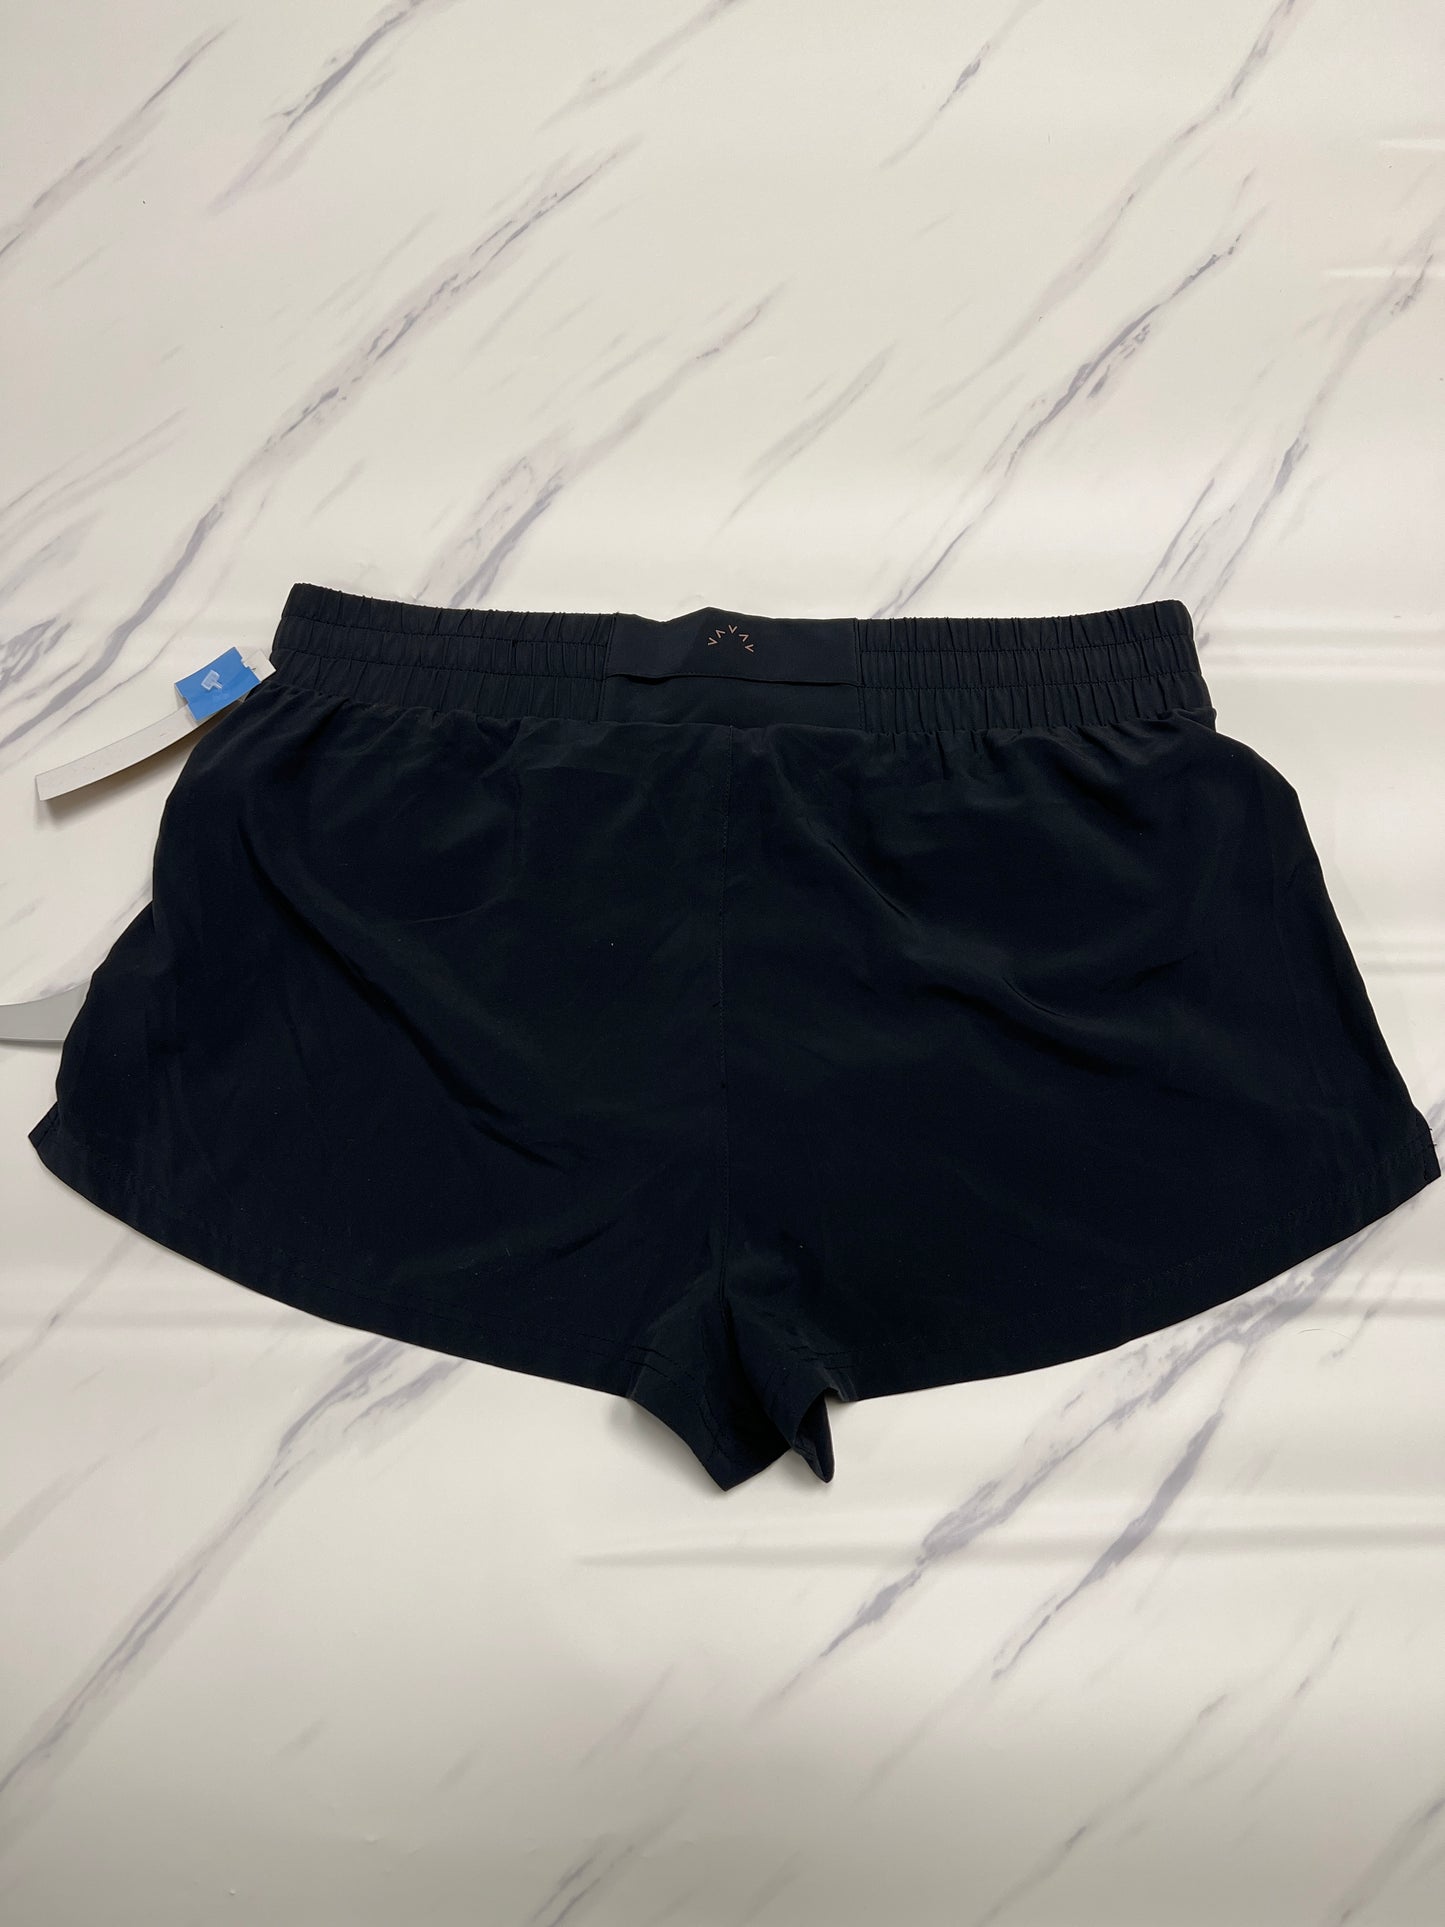 Athletic Shorts By Cma  Size: Xl